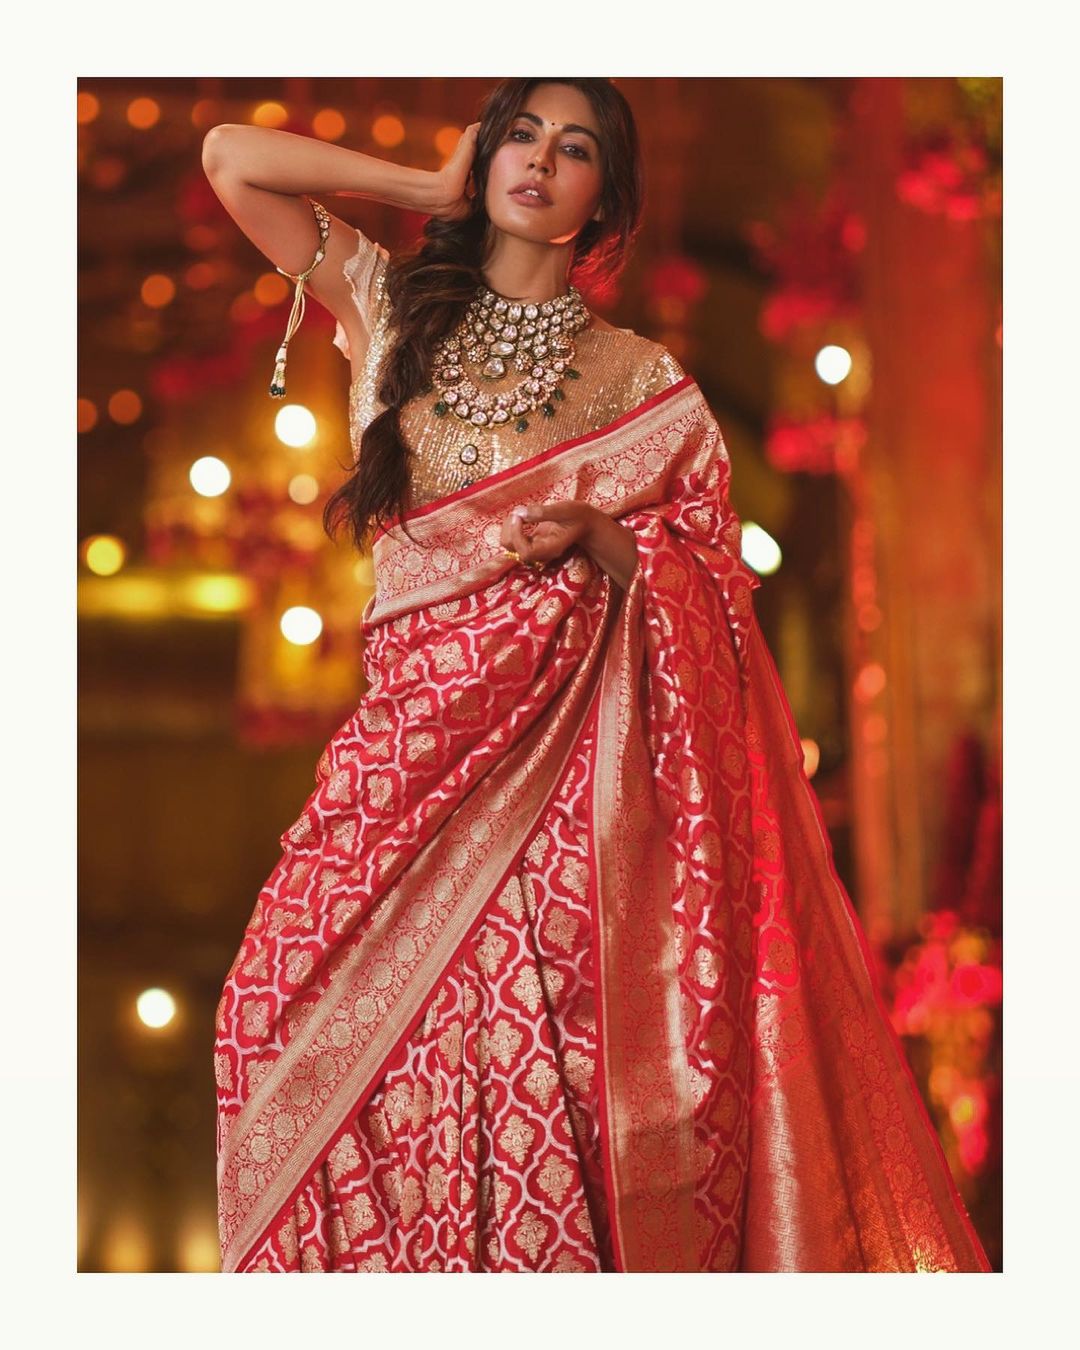 Chitrangda Singh strikes a pose in the red saree. 